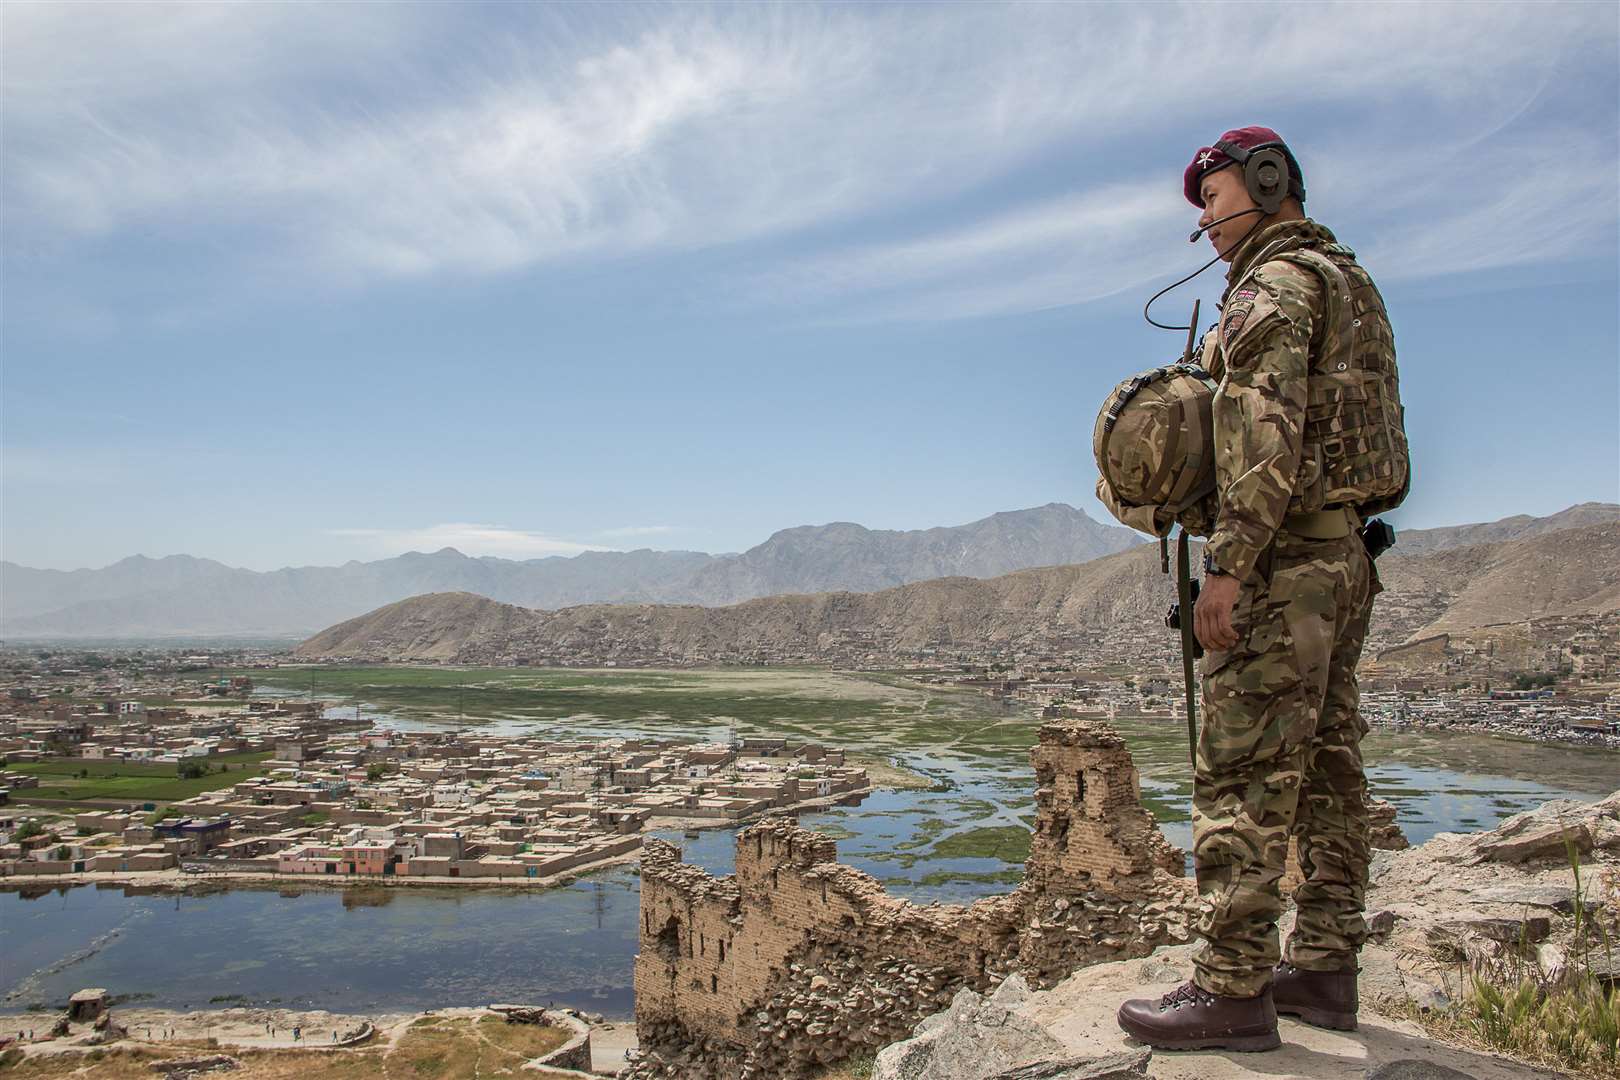 Gurkhas from Shorncliffe in Folkestone on tour in Afghanistan. Credit: British Army/Royal Gurkha Rifles